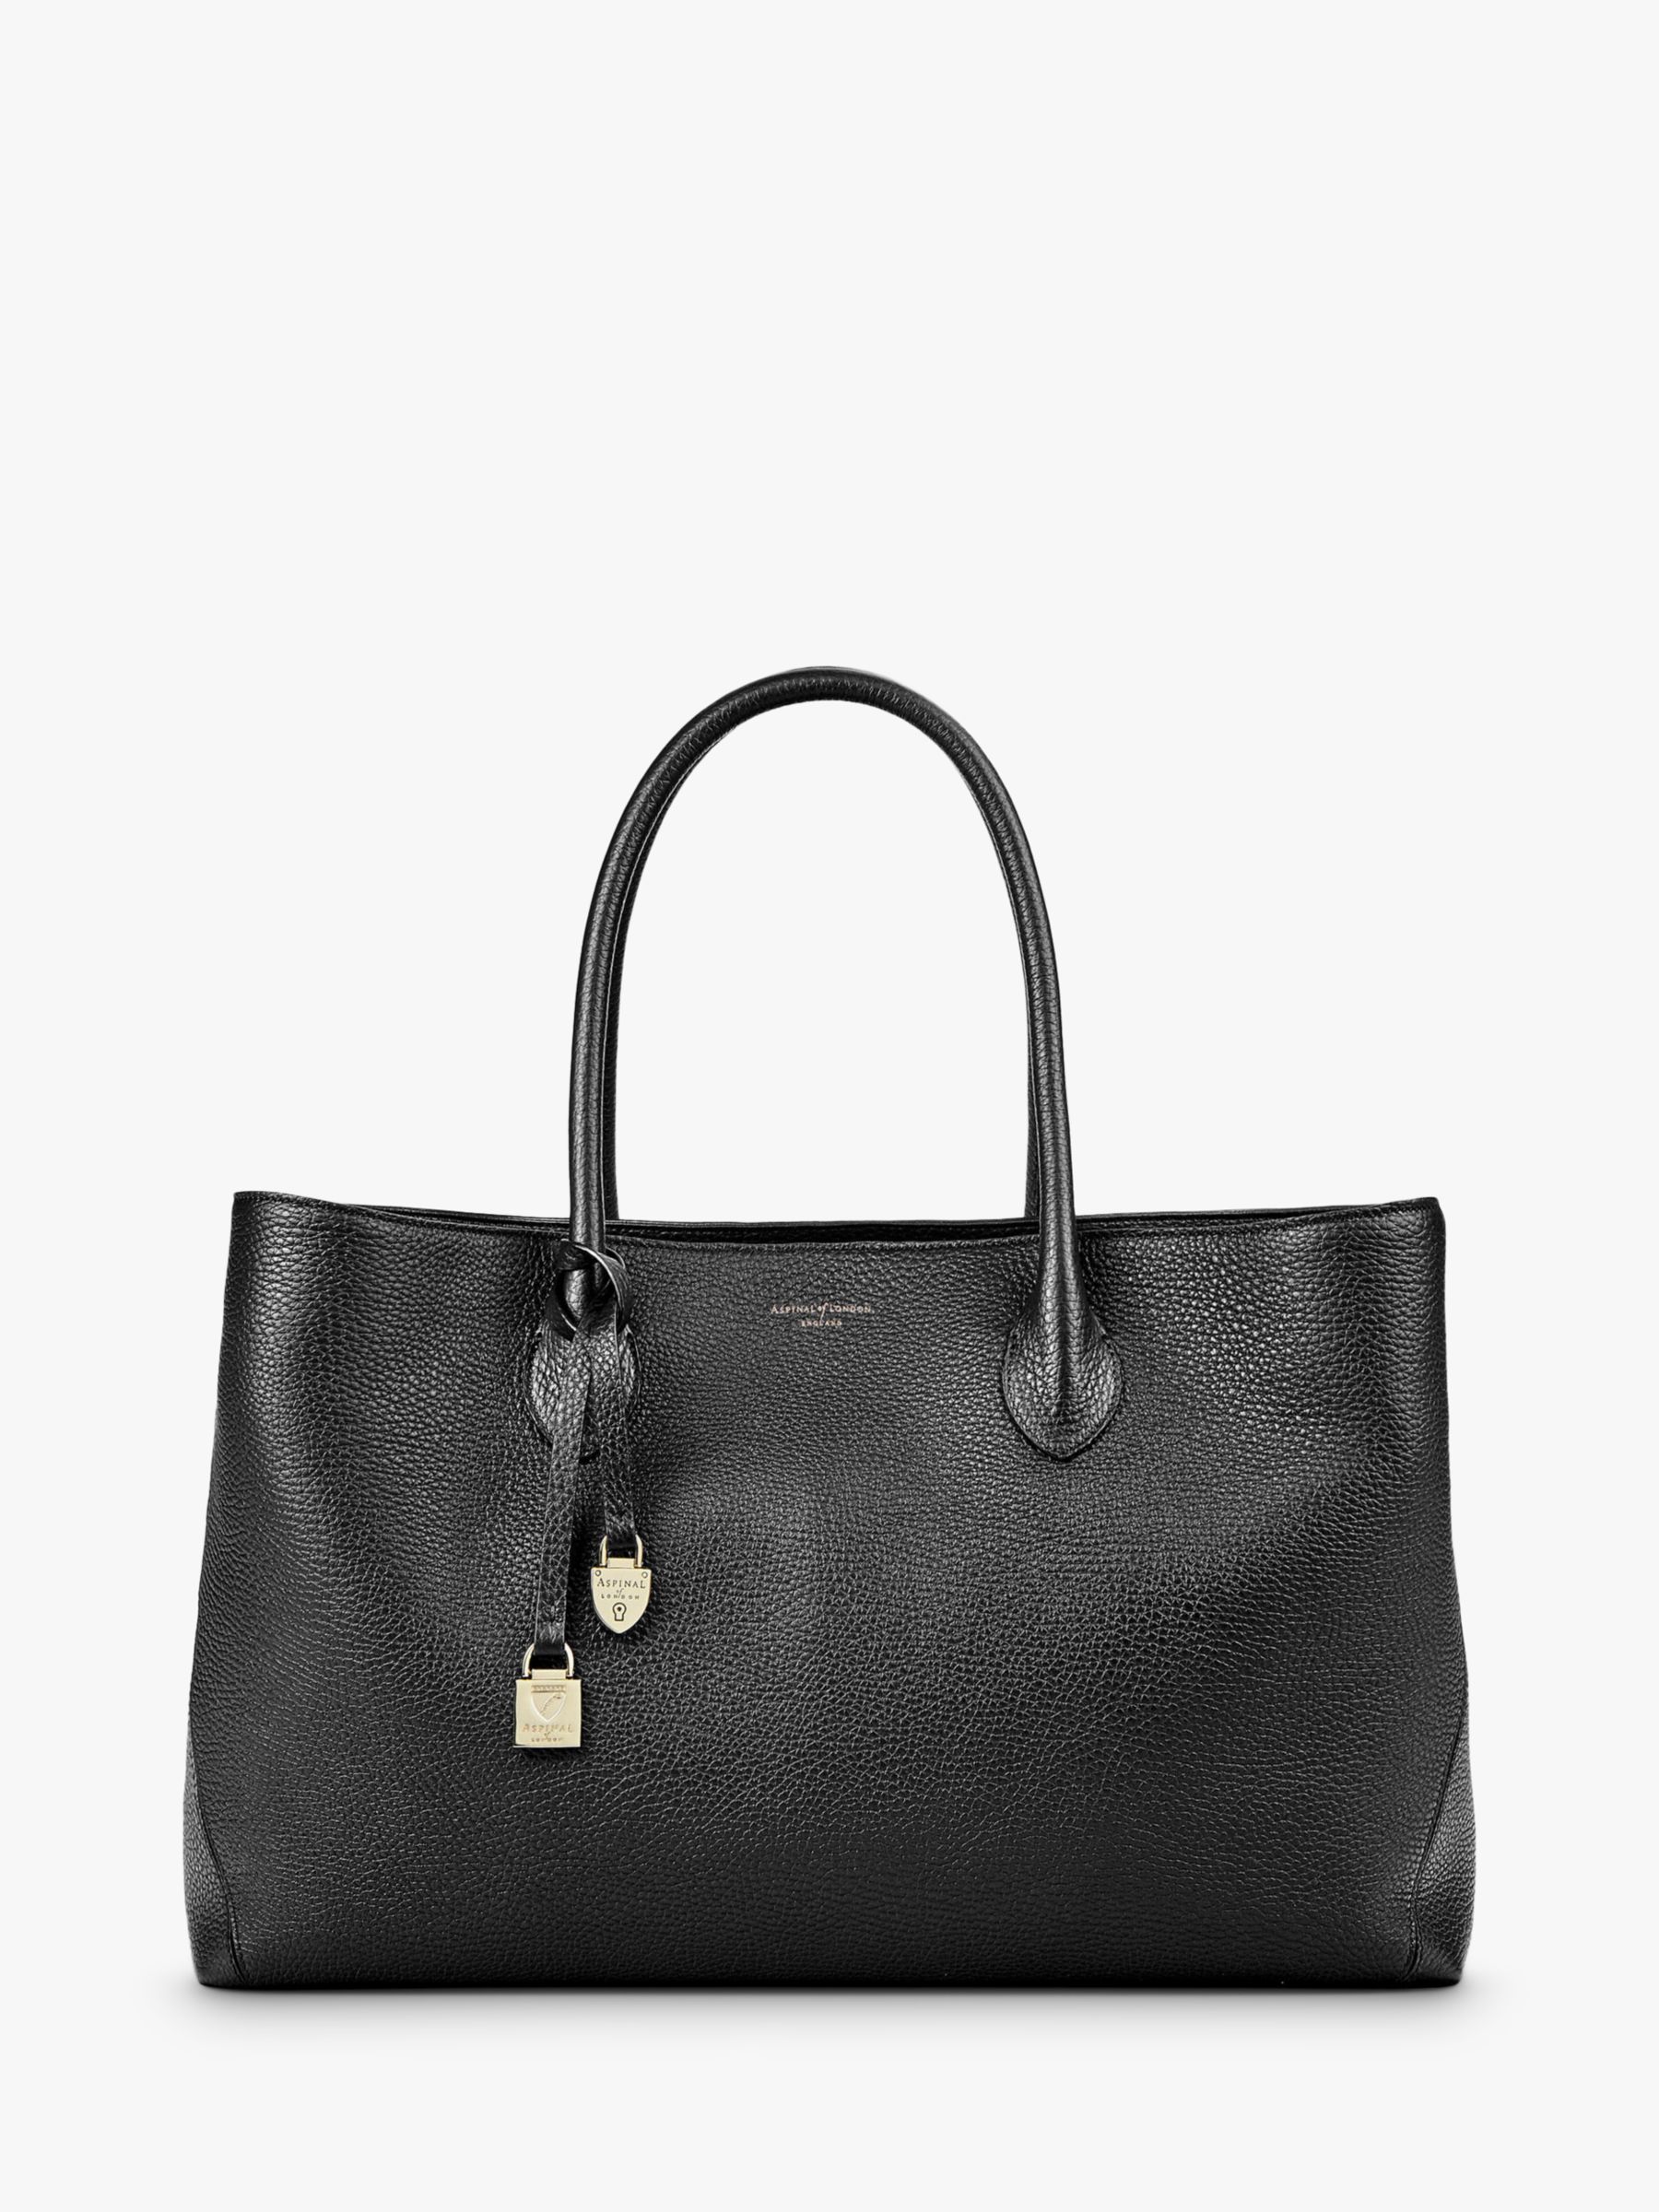 Large Pebble Black Leather Tote Bag for Women Large Black 